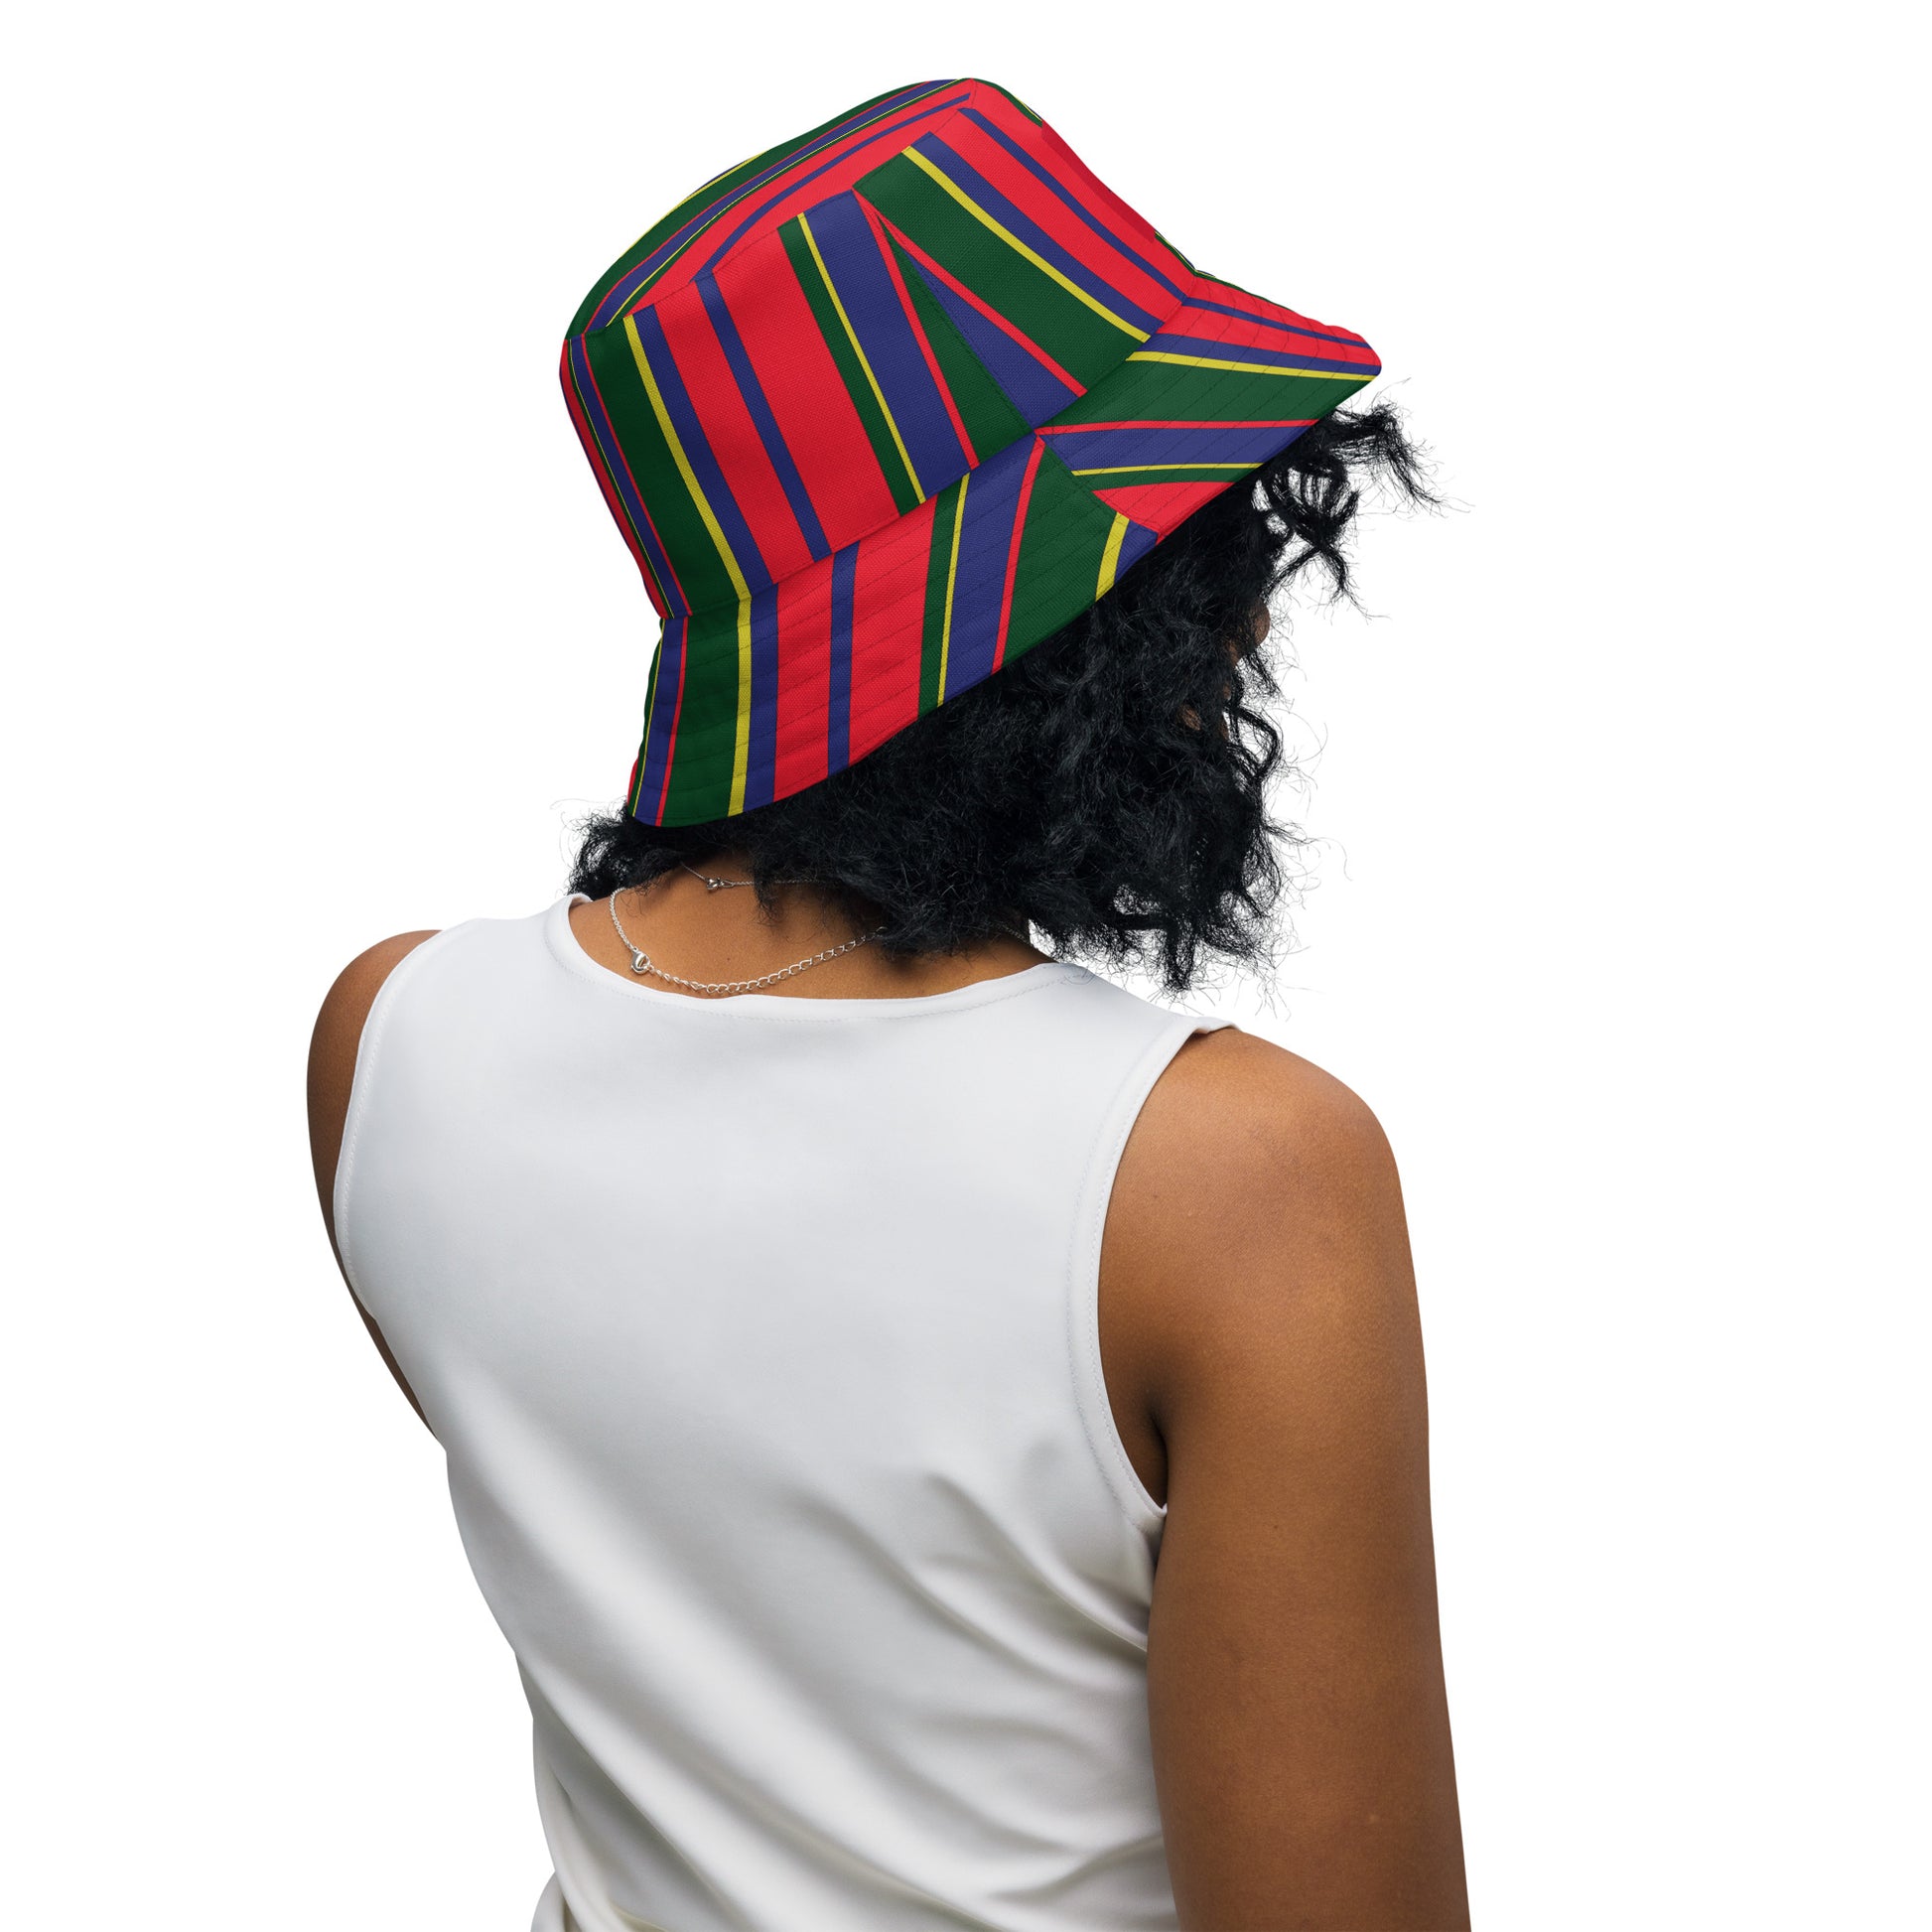 Polo Carib Reversible bucket hat - Hip-Hatter